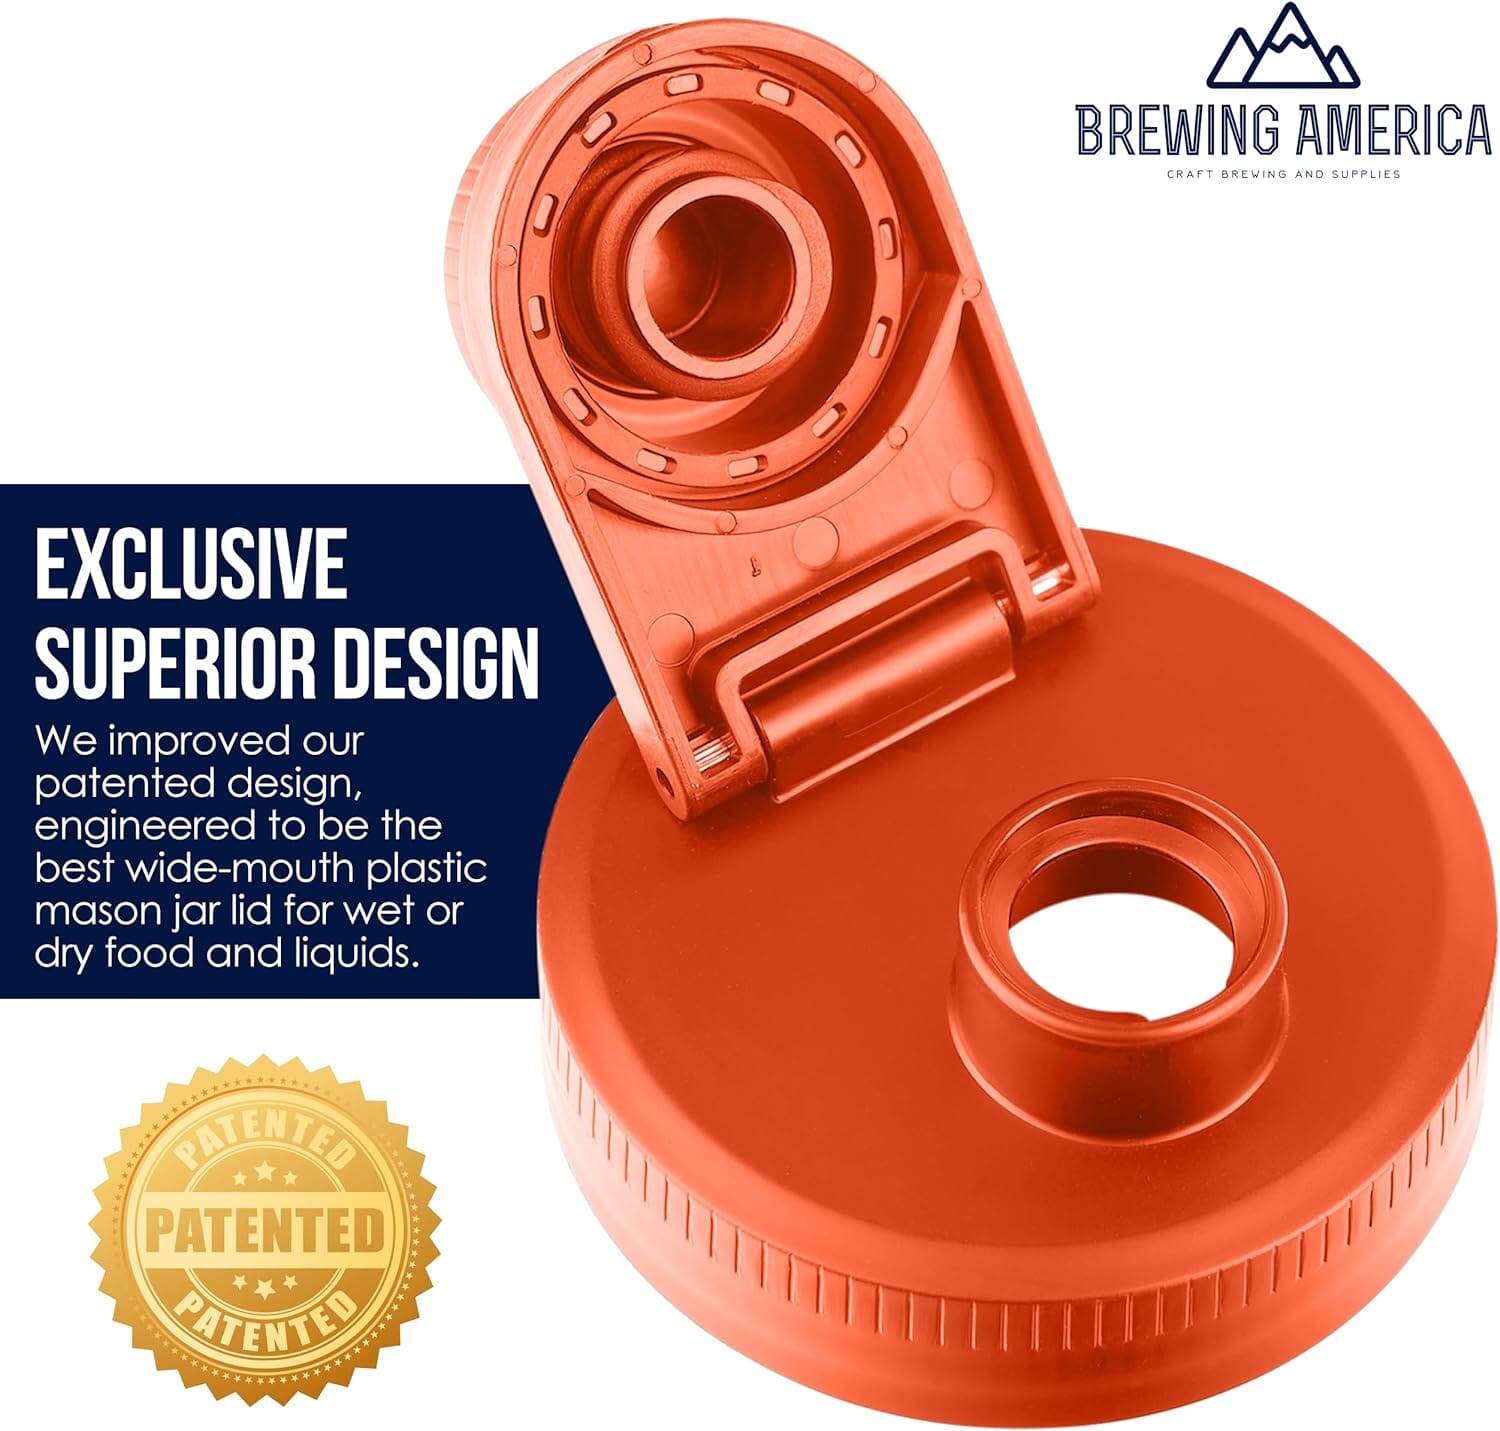 Mason Jar Lids Wide Mouth Plastic 4 Pack Leak Proof with Flip Cap Pouring Spout & Drink Hole - Orange Accessories Brewing America 